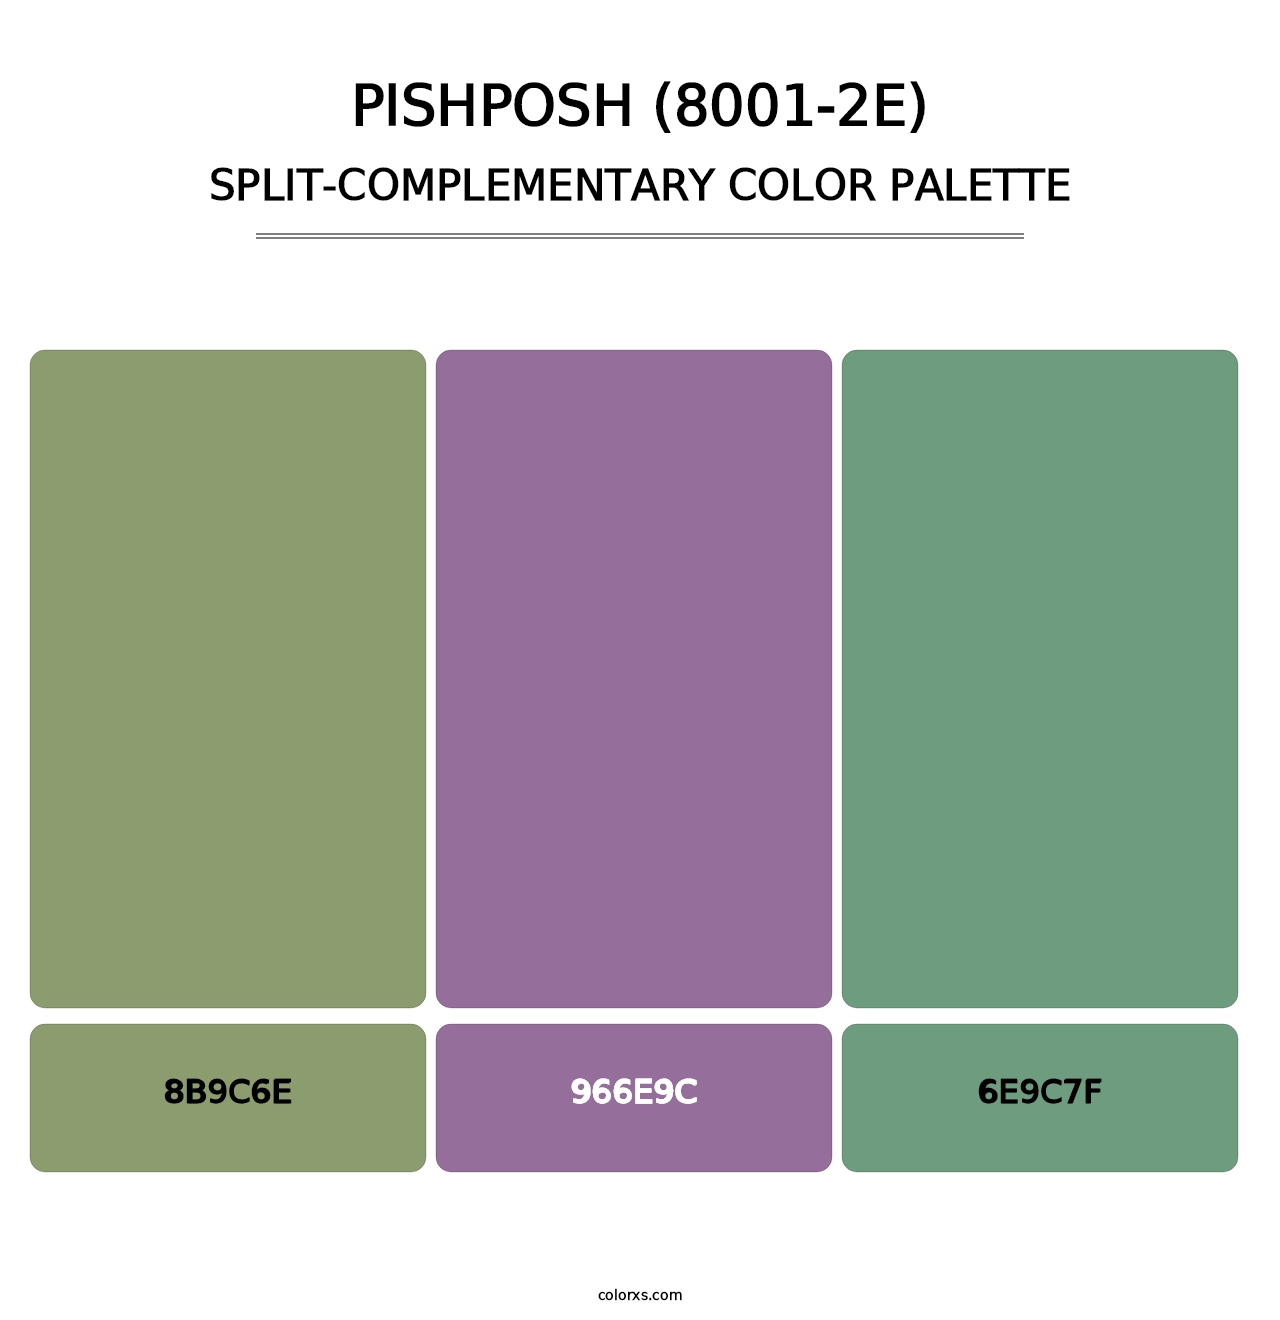 Pishposh (8001-2E) - Split-Complementary Color Palette